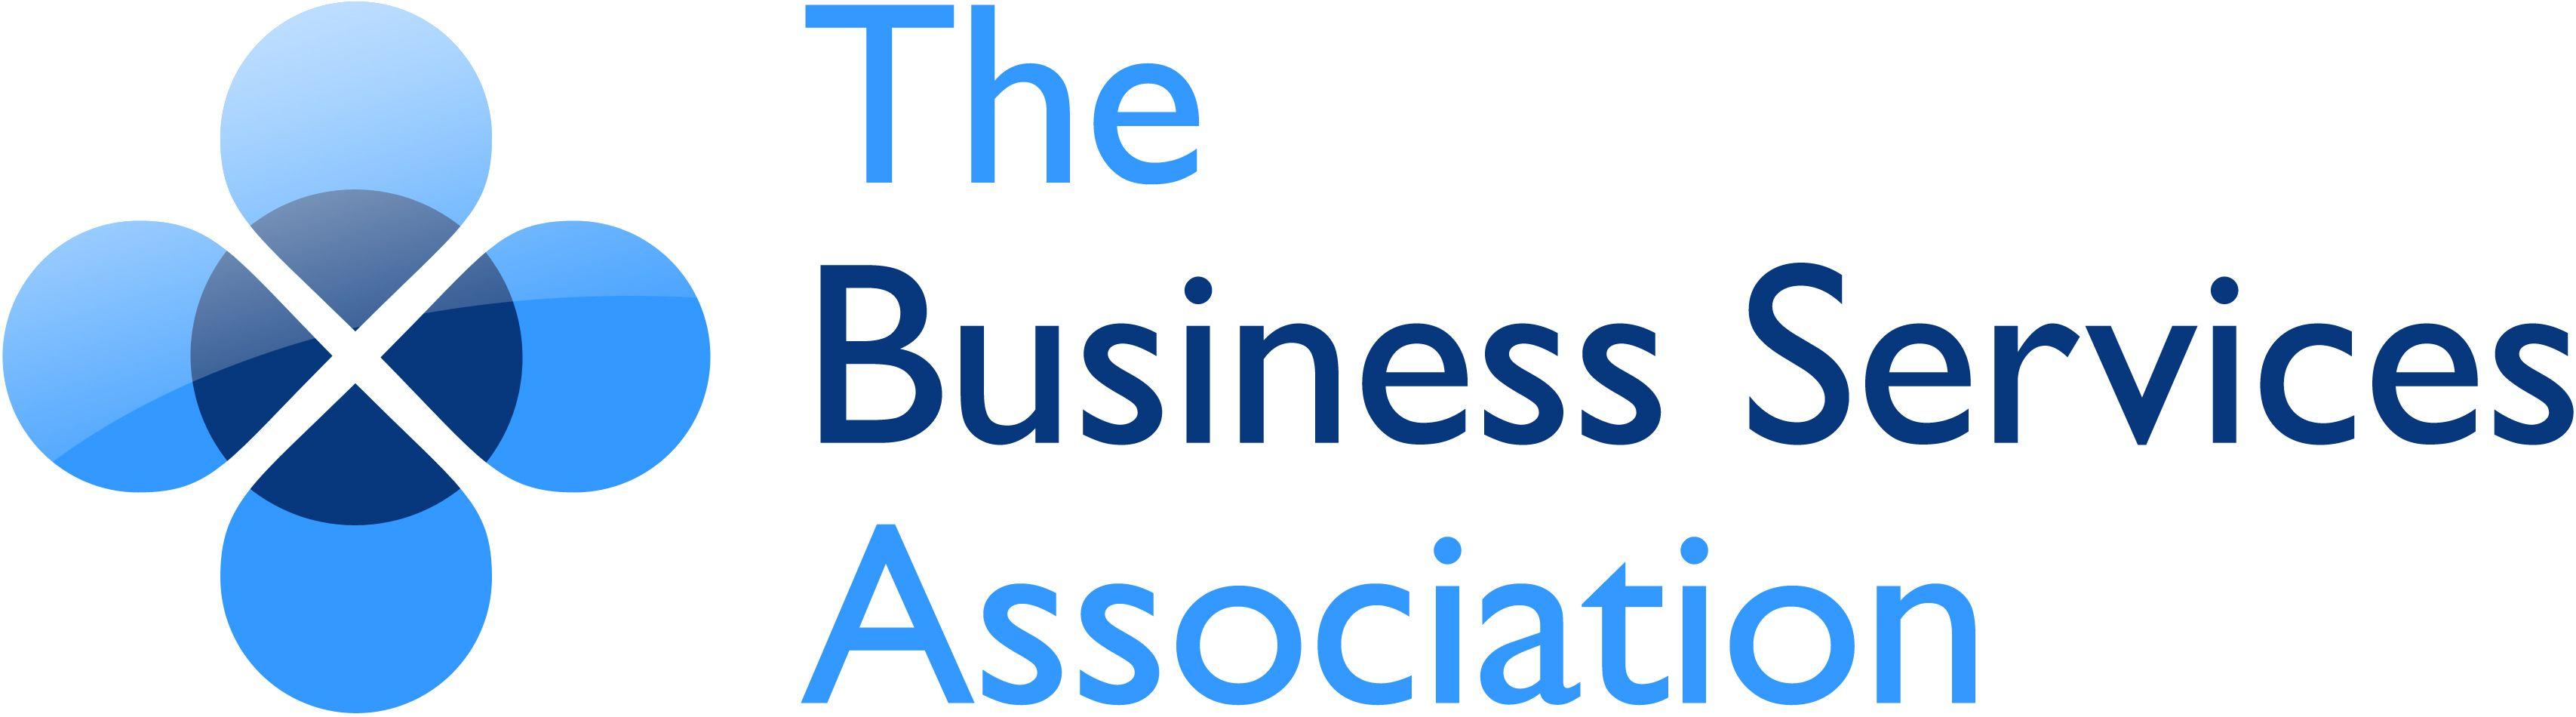 Business Service Logo - Business Services Association